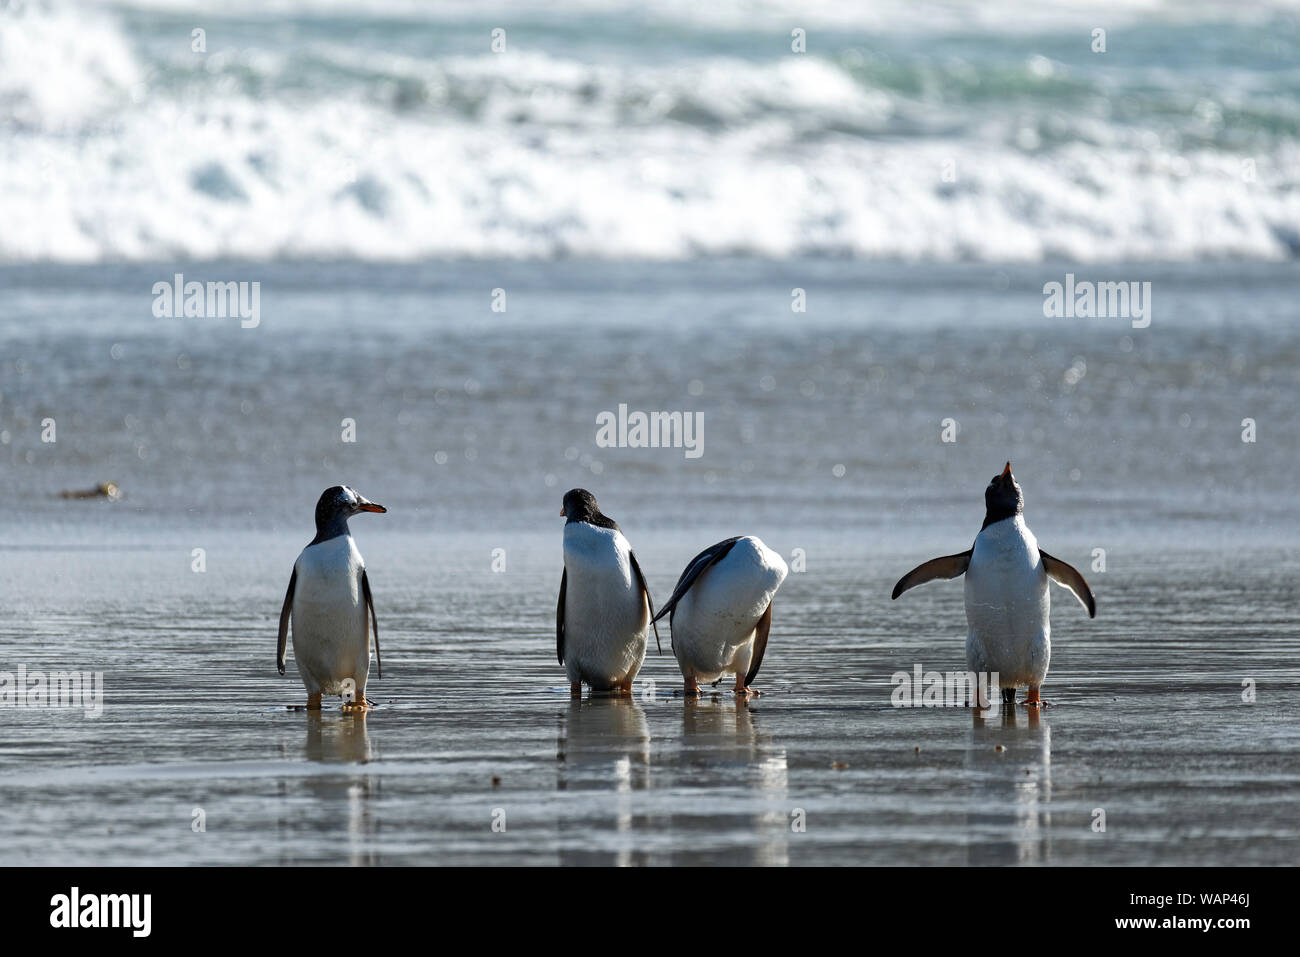 Eselspinguine (Pygoscelis papua) am Strand, Falkland Inseln. A Group of gentoo penguins on the beach, Falkland Islands. Stock Photo